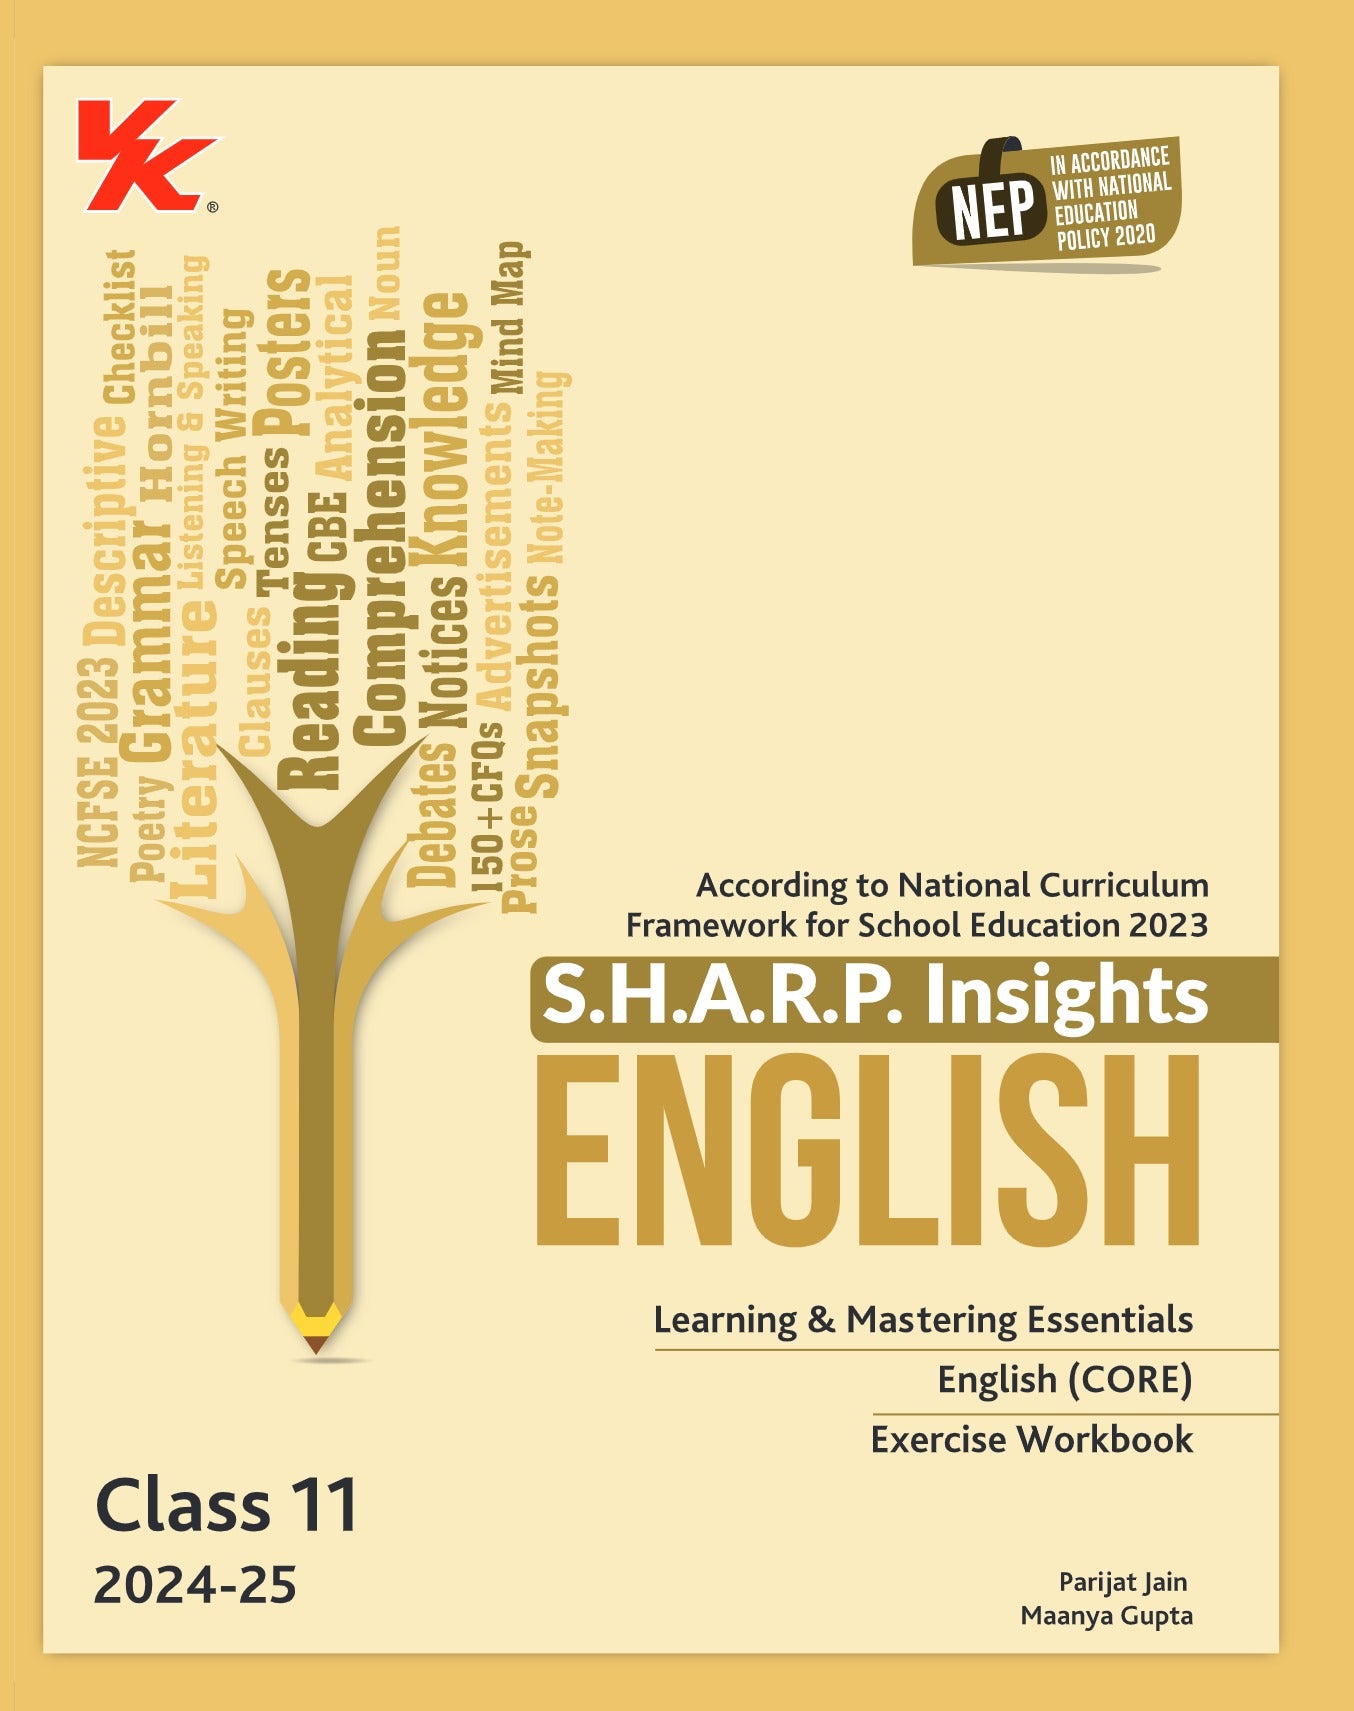 S.H.A.R.P. Insights for English (CORE) Exercise Workbook for Class 11 CBSE 2024-25 by Parijat Jain (IIT-D, IIM-A) & Maanya Gupta (IIM-A)